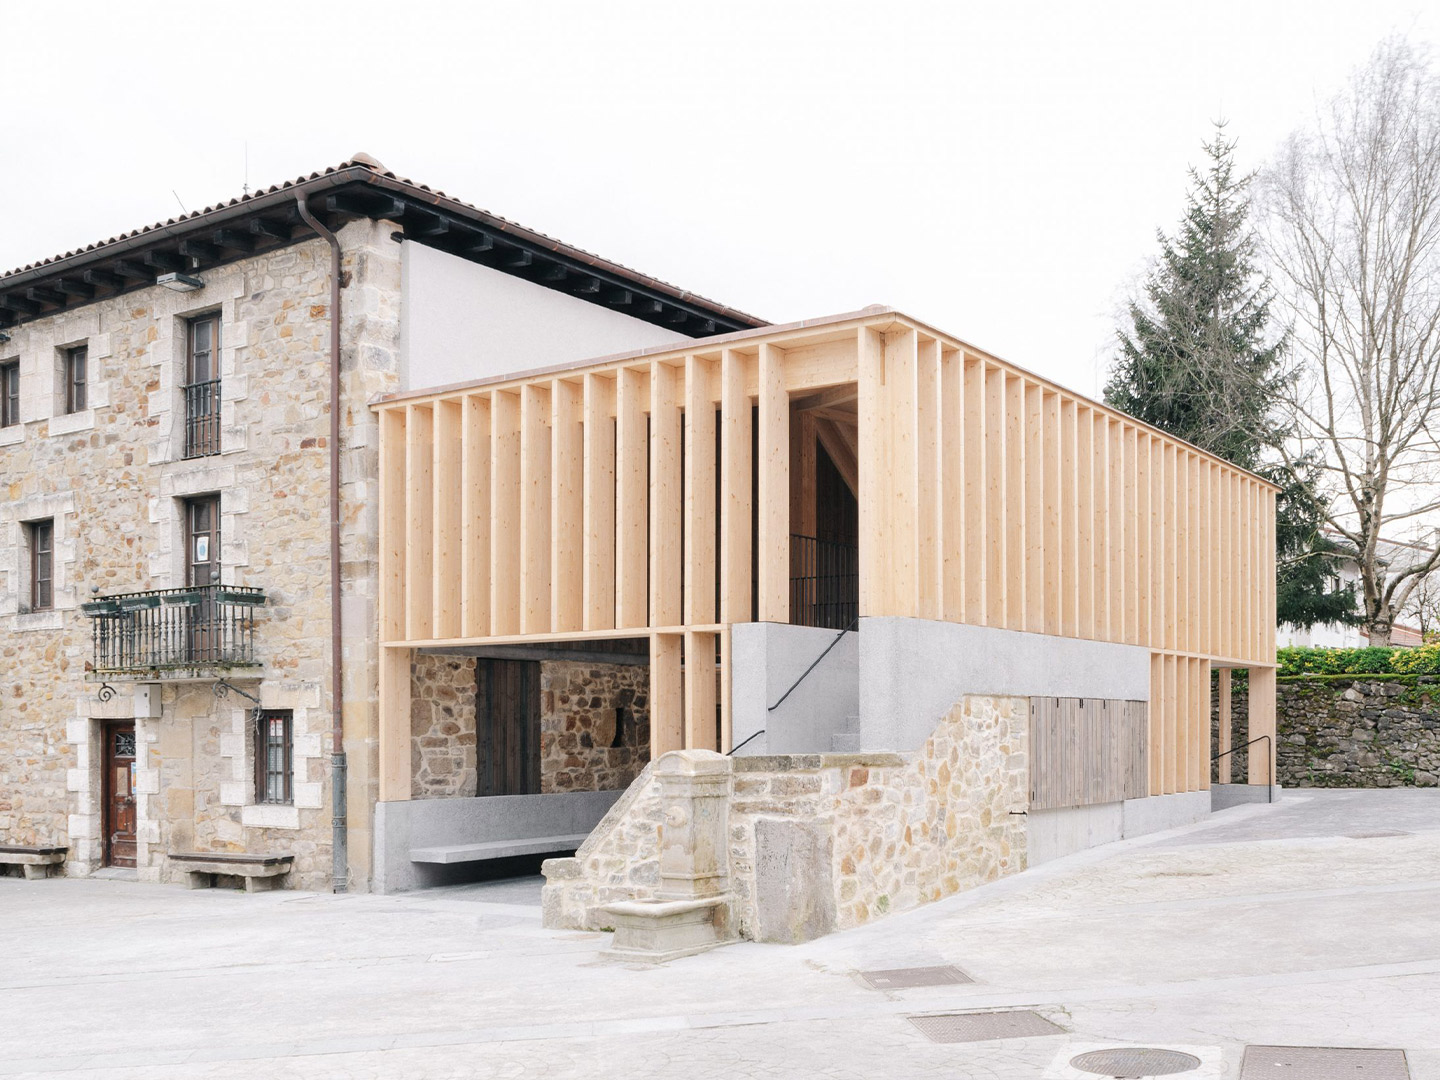 Shelter in Larrabetzu, Spain, by Behark architects